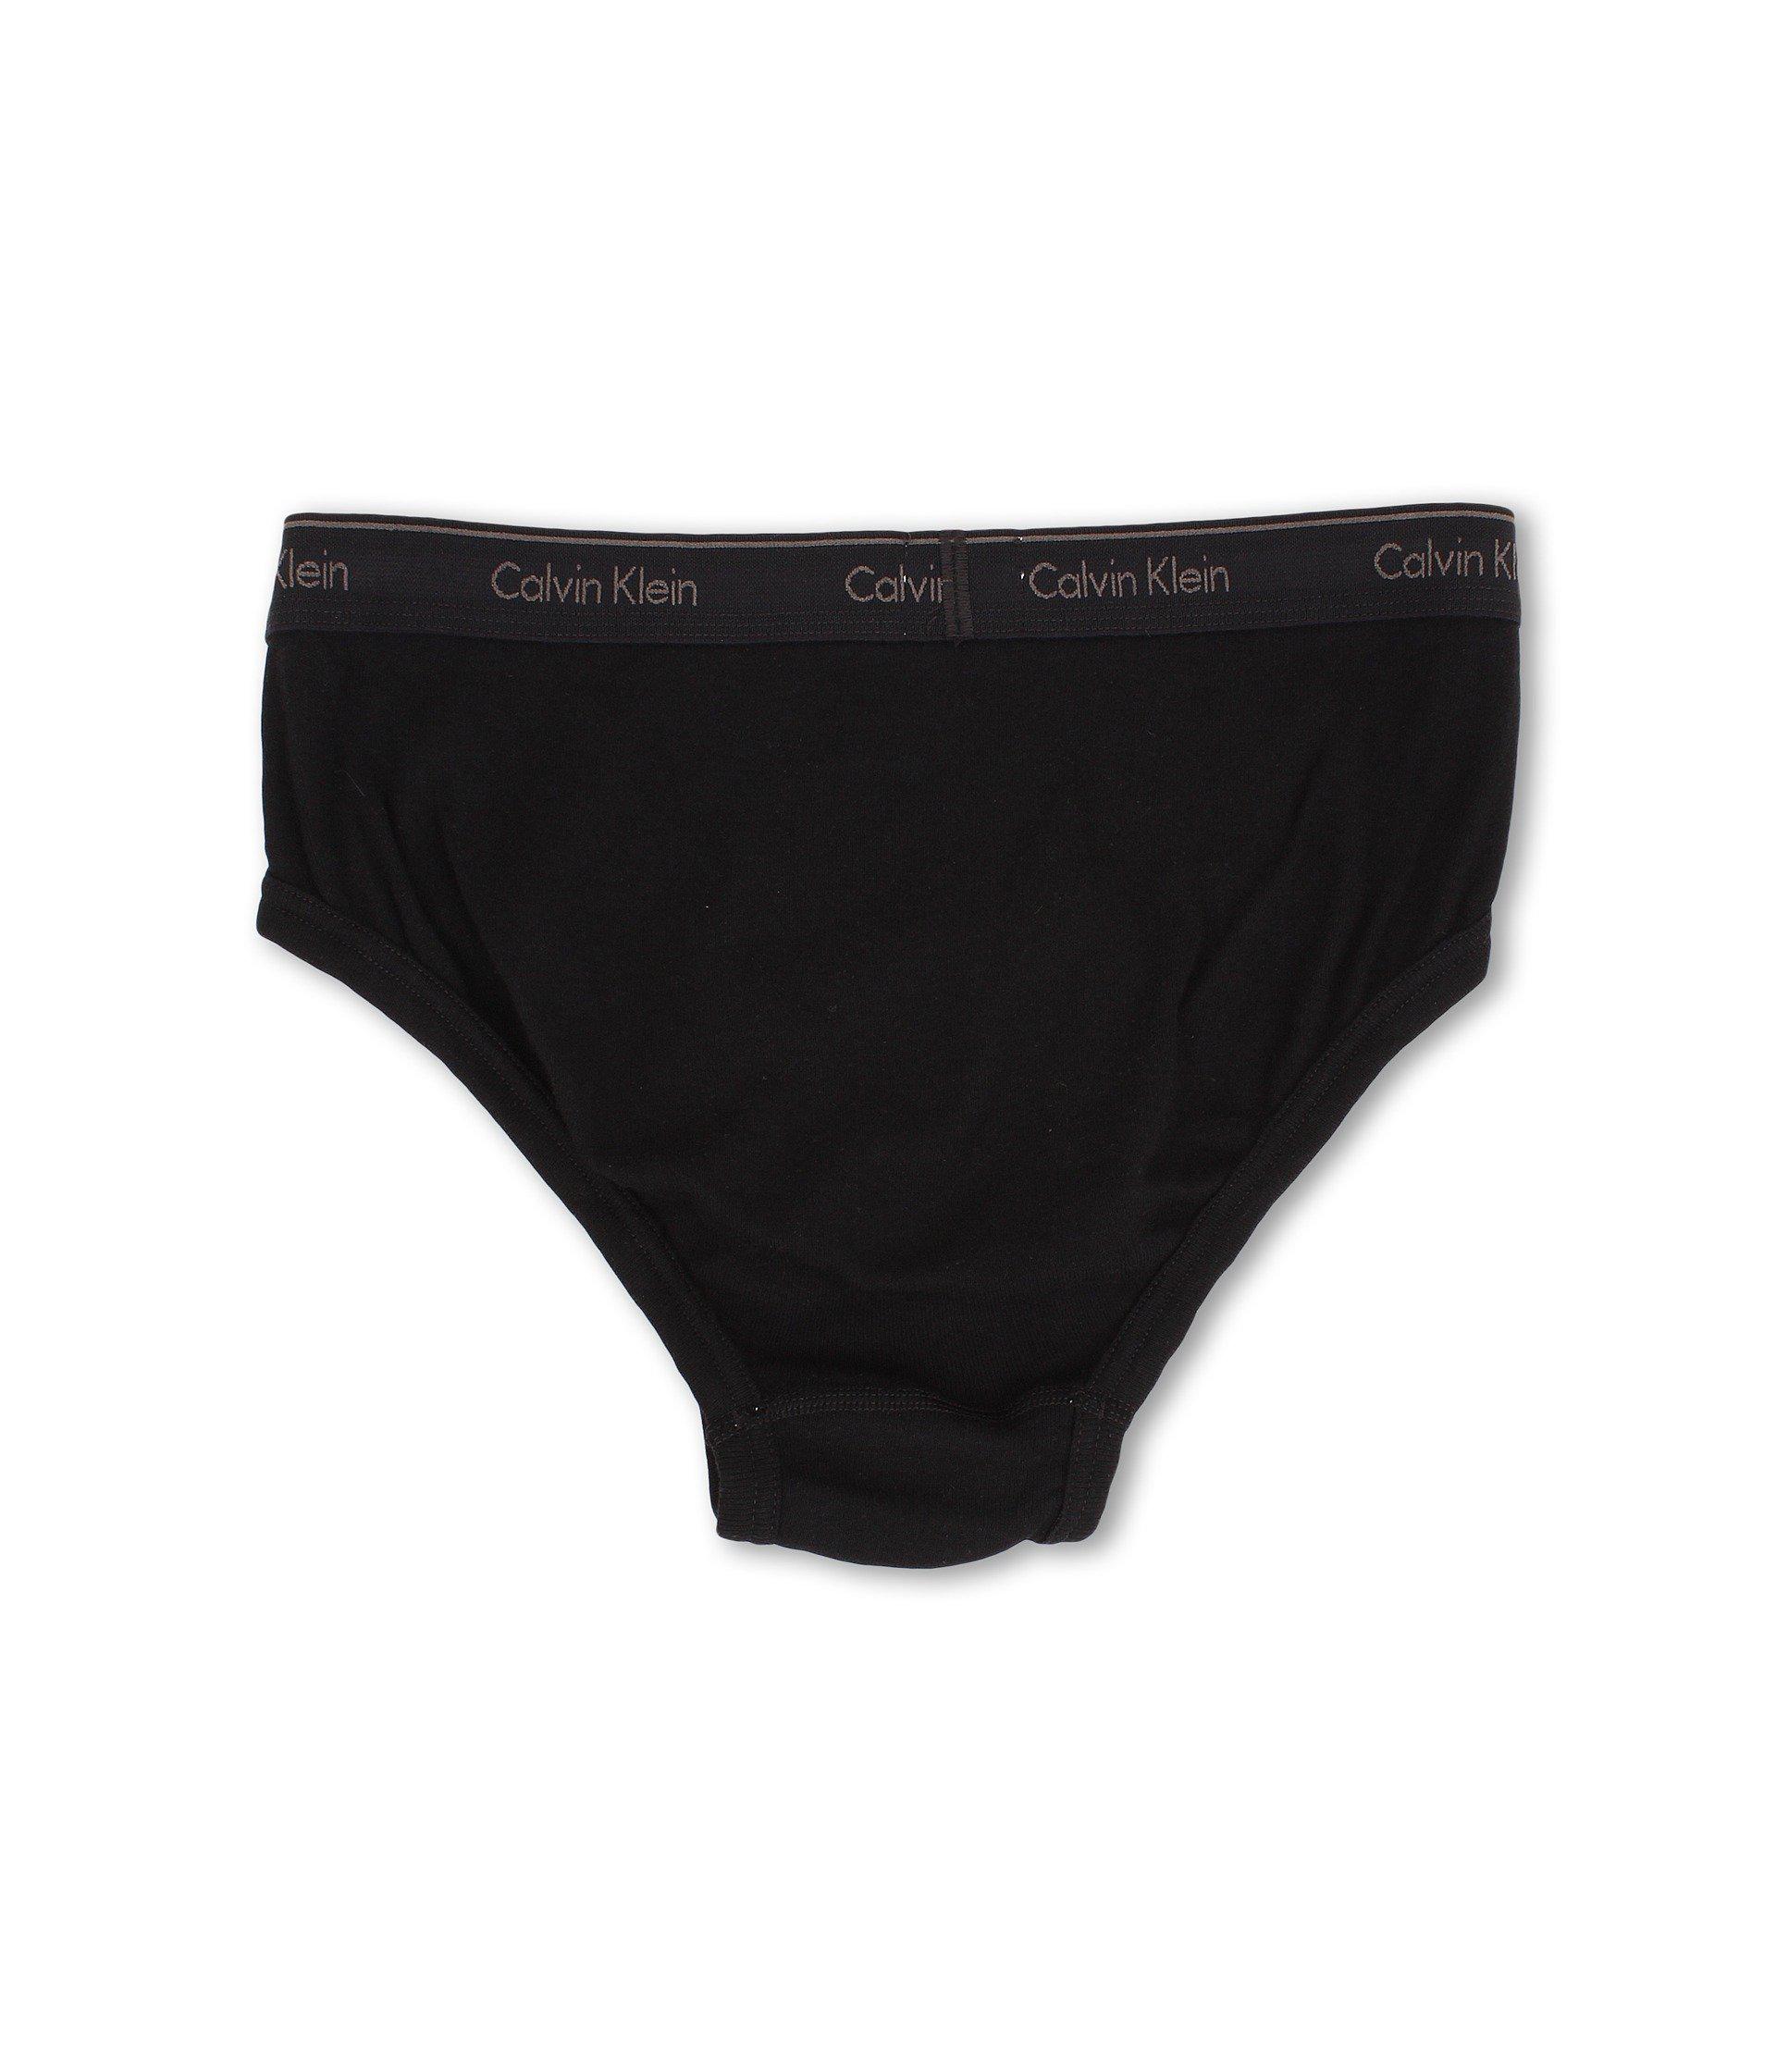 Calvin Klein Underwear LOW RISE - Briefs - black - Zalando.de